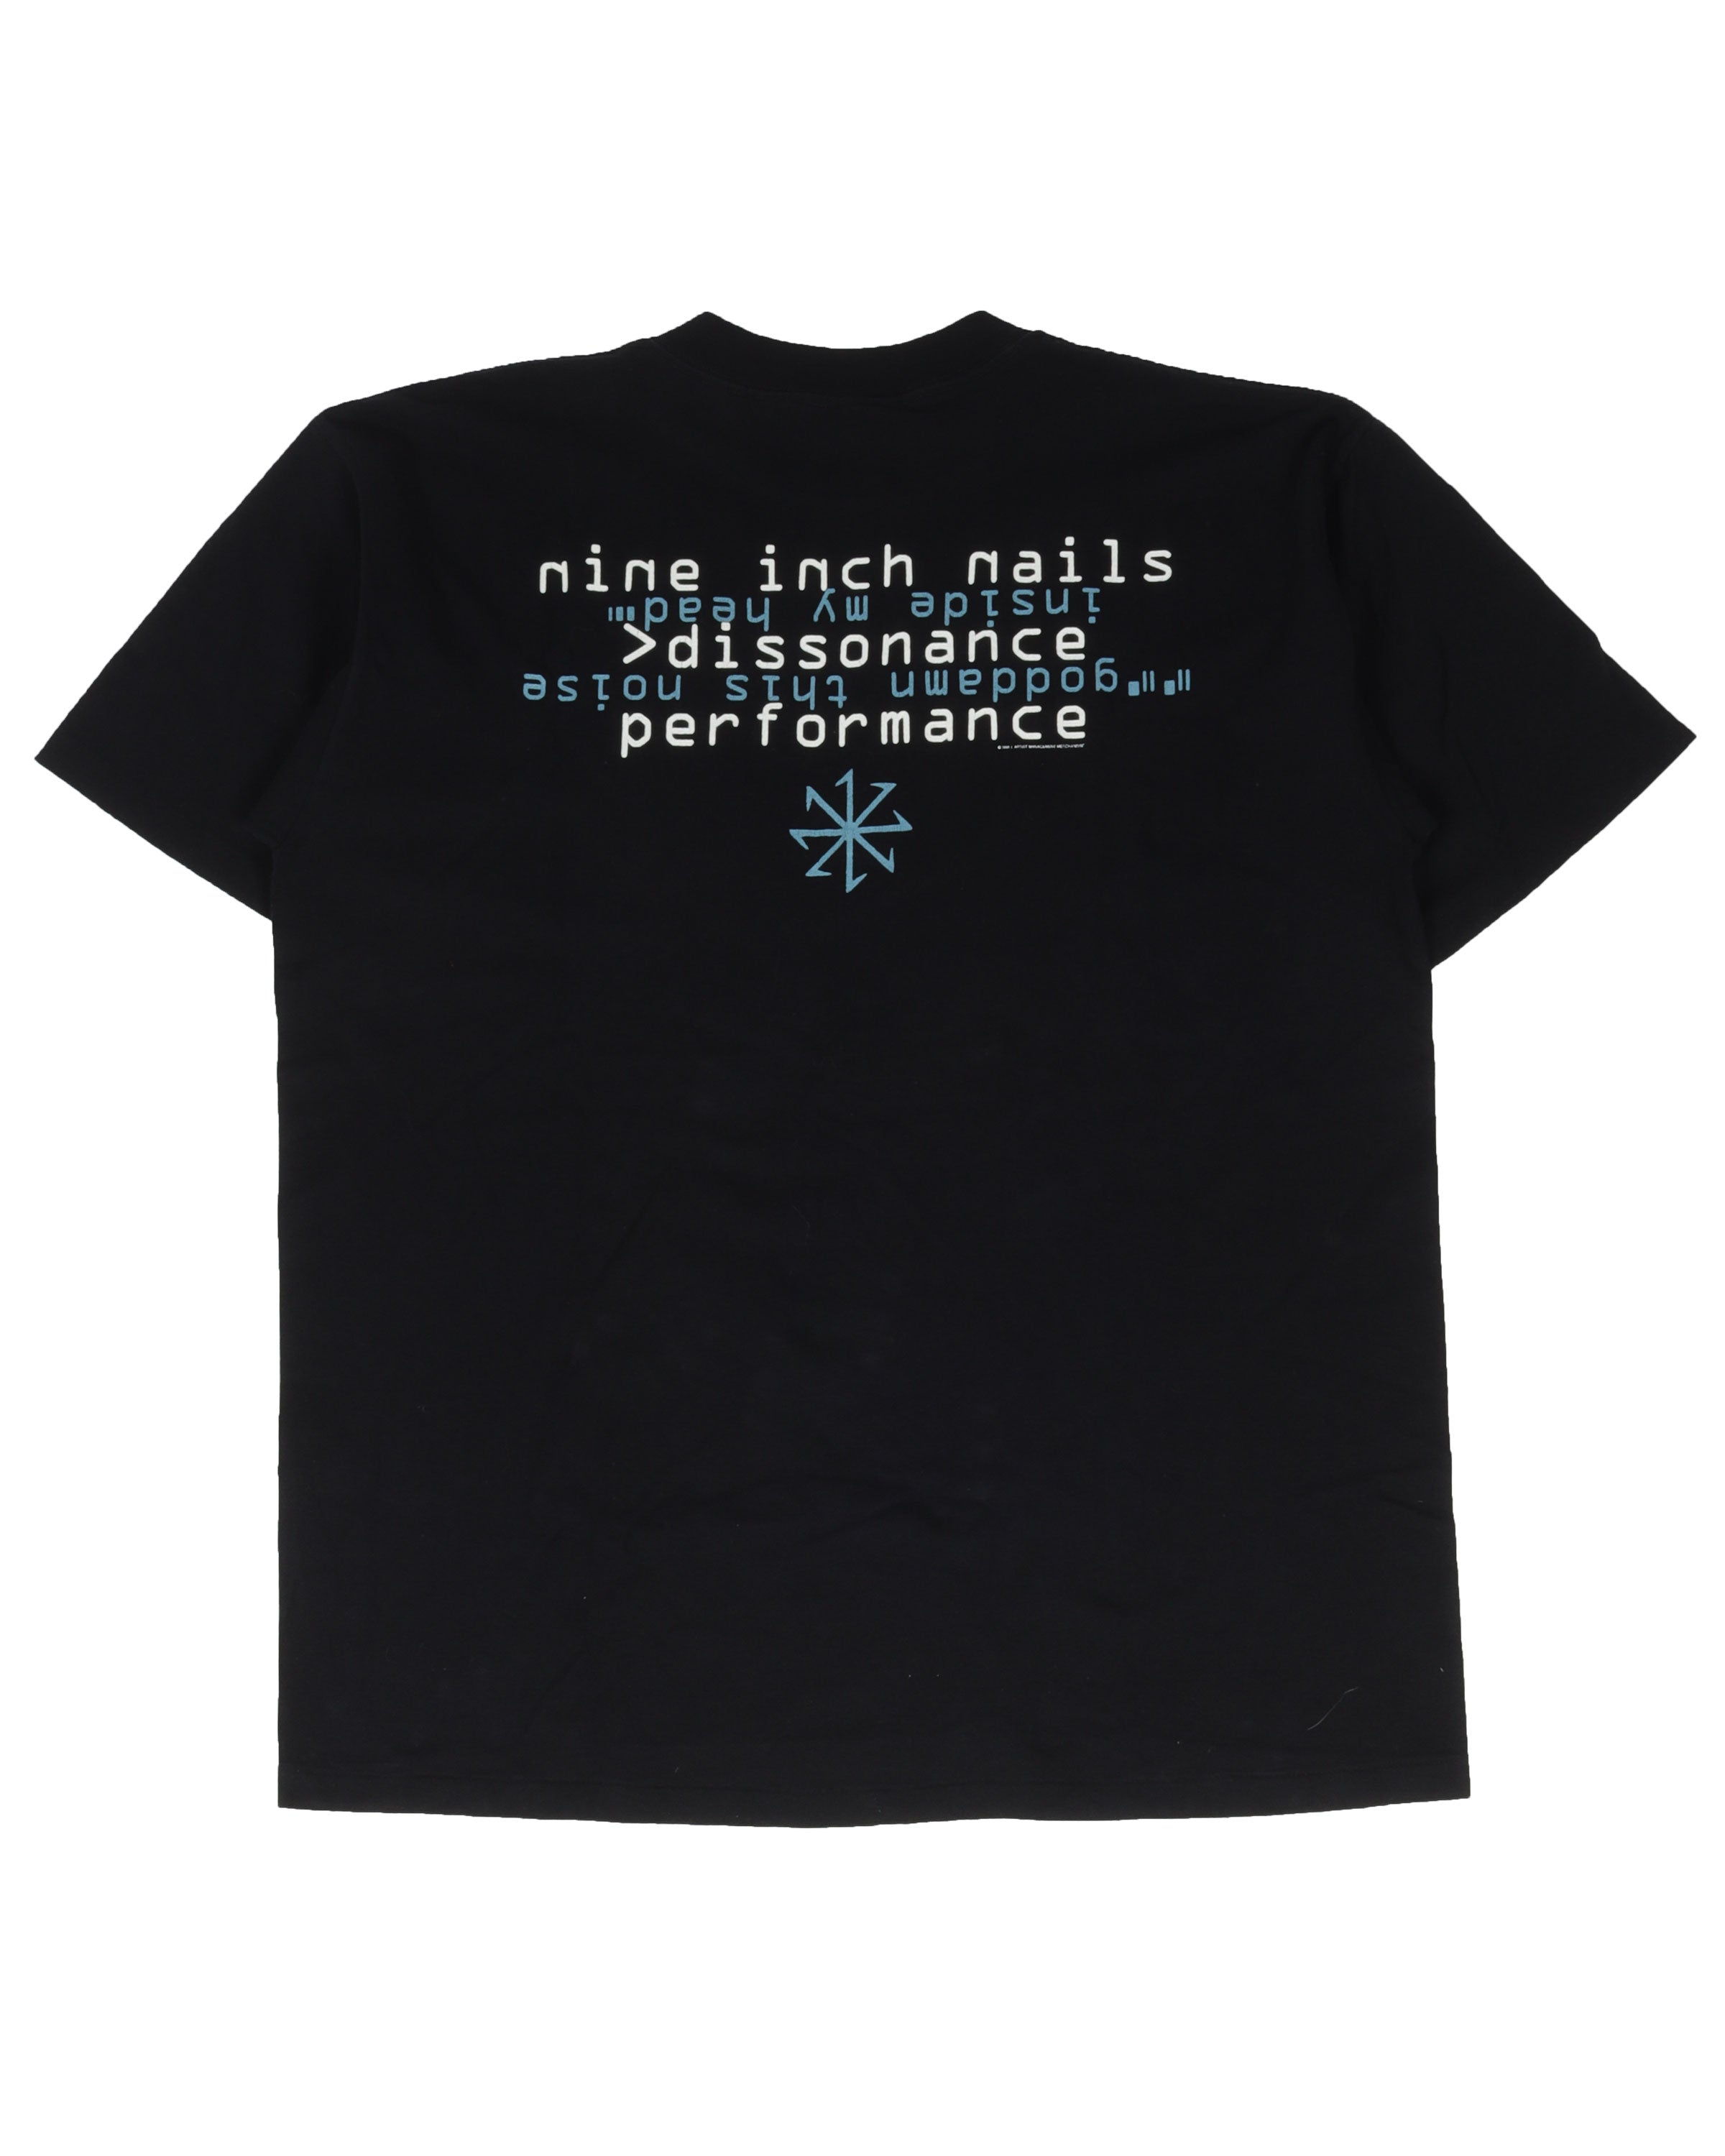 Nine Inch Nails "Dissonance" T-Shirt